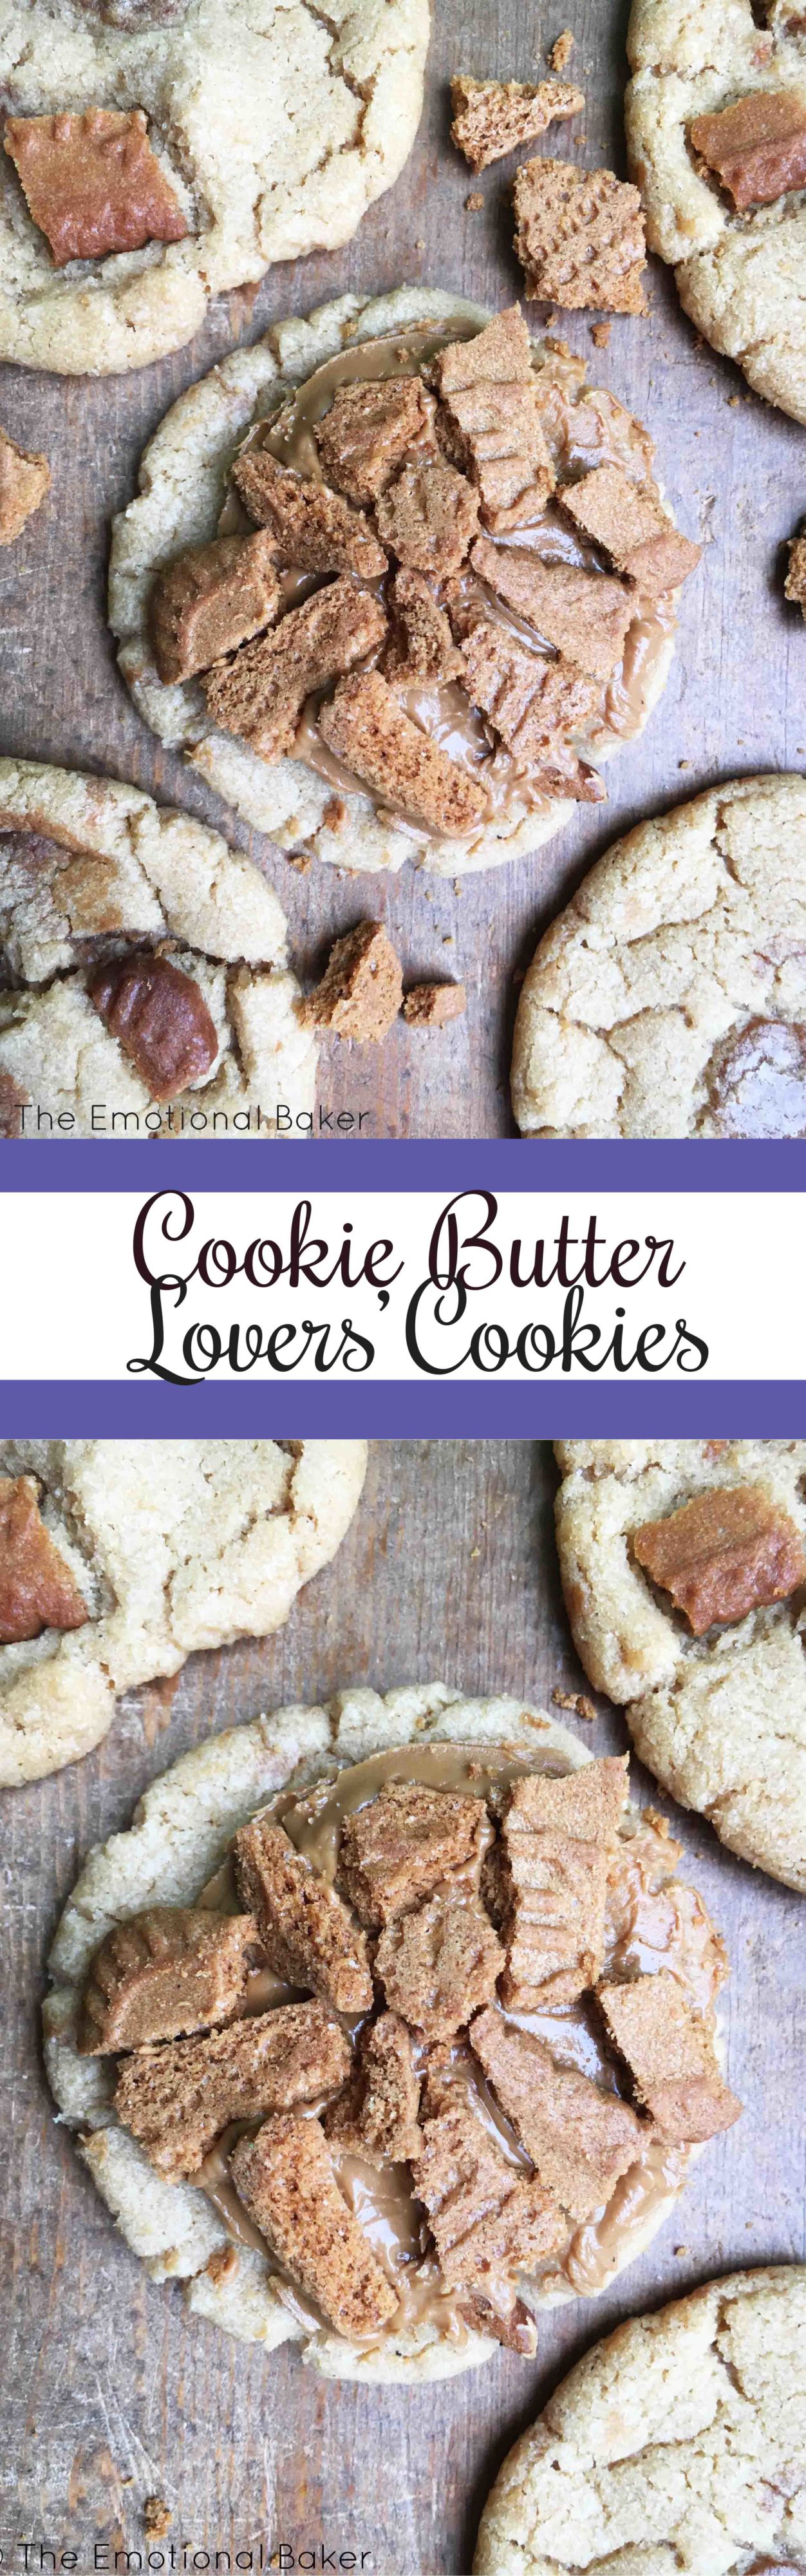 Cookie Butter Lovers' Cookies